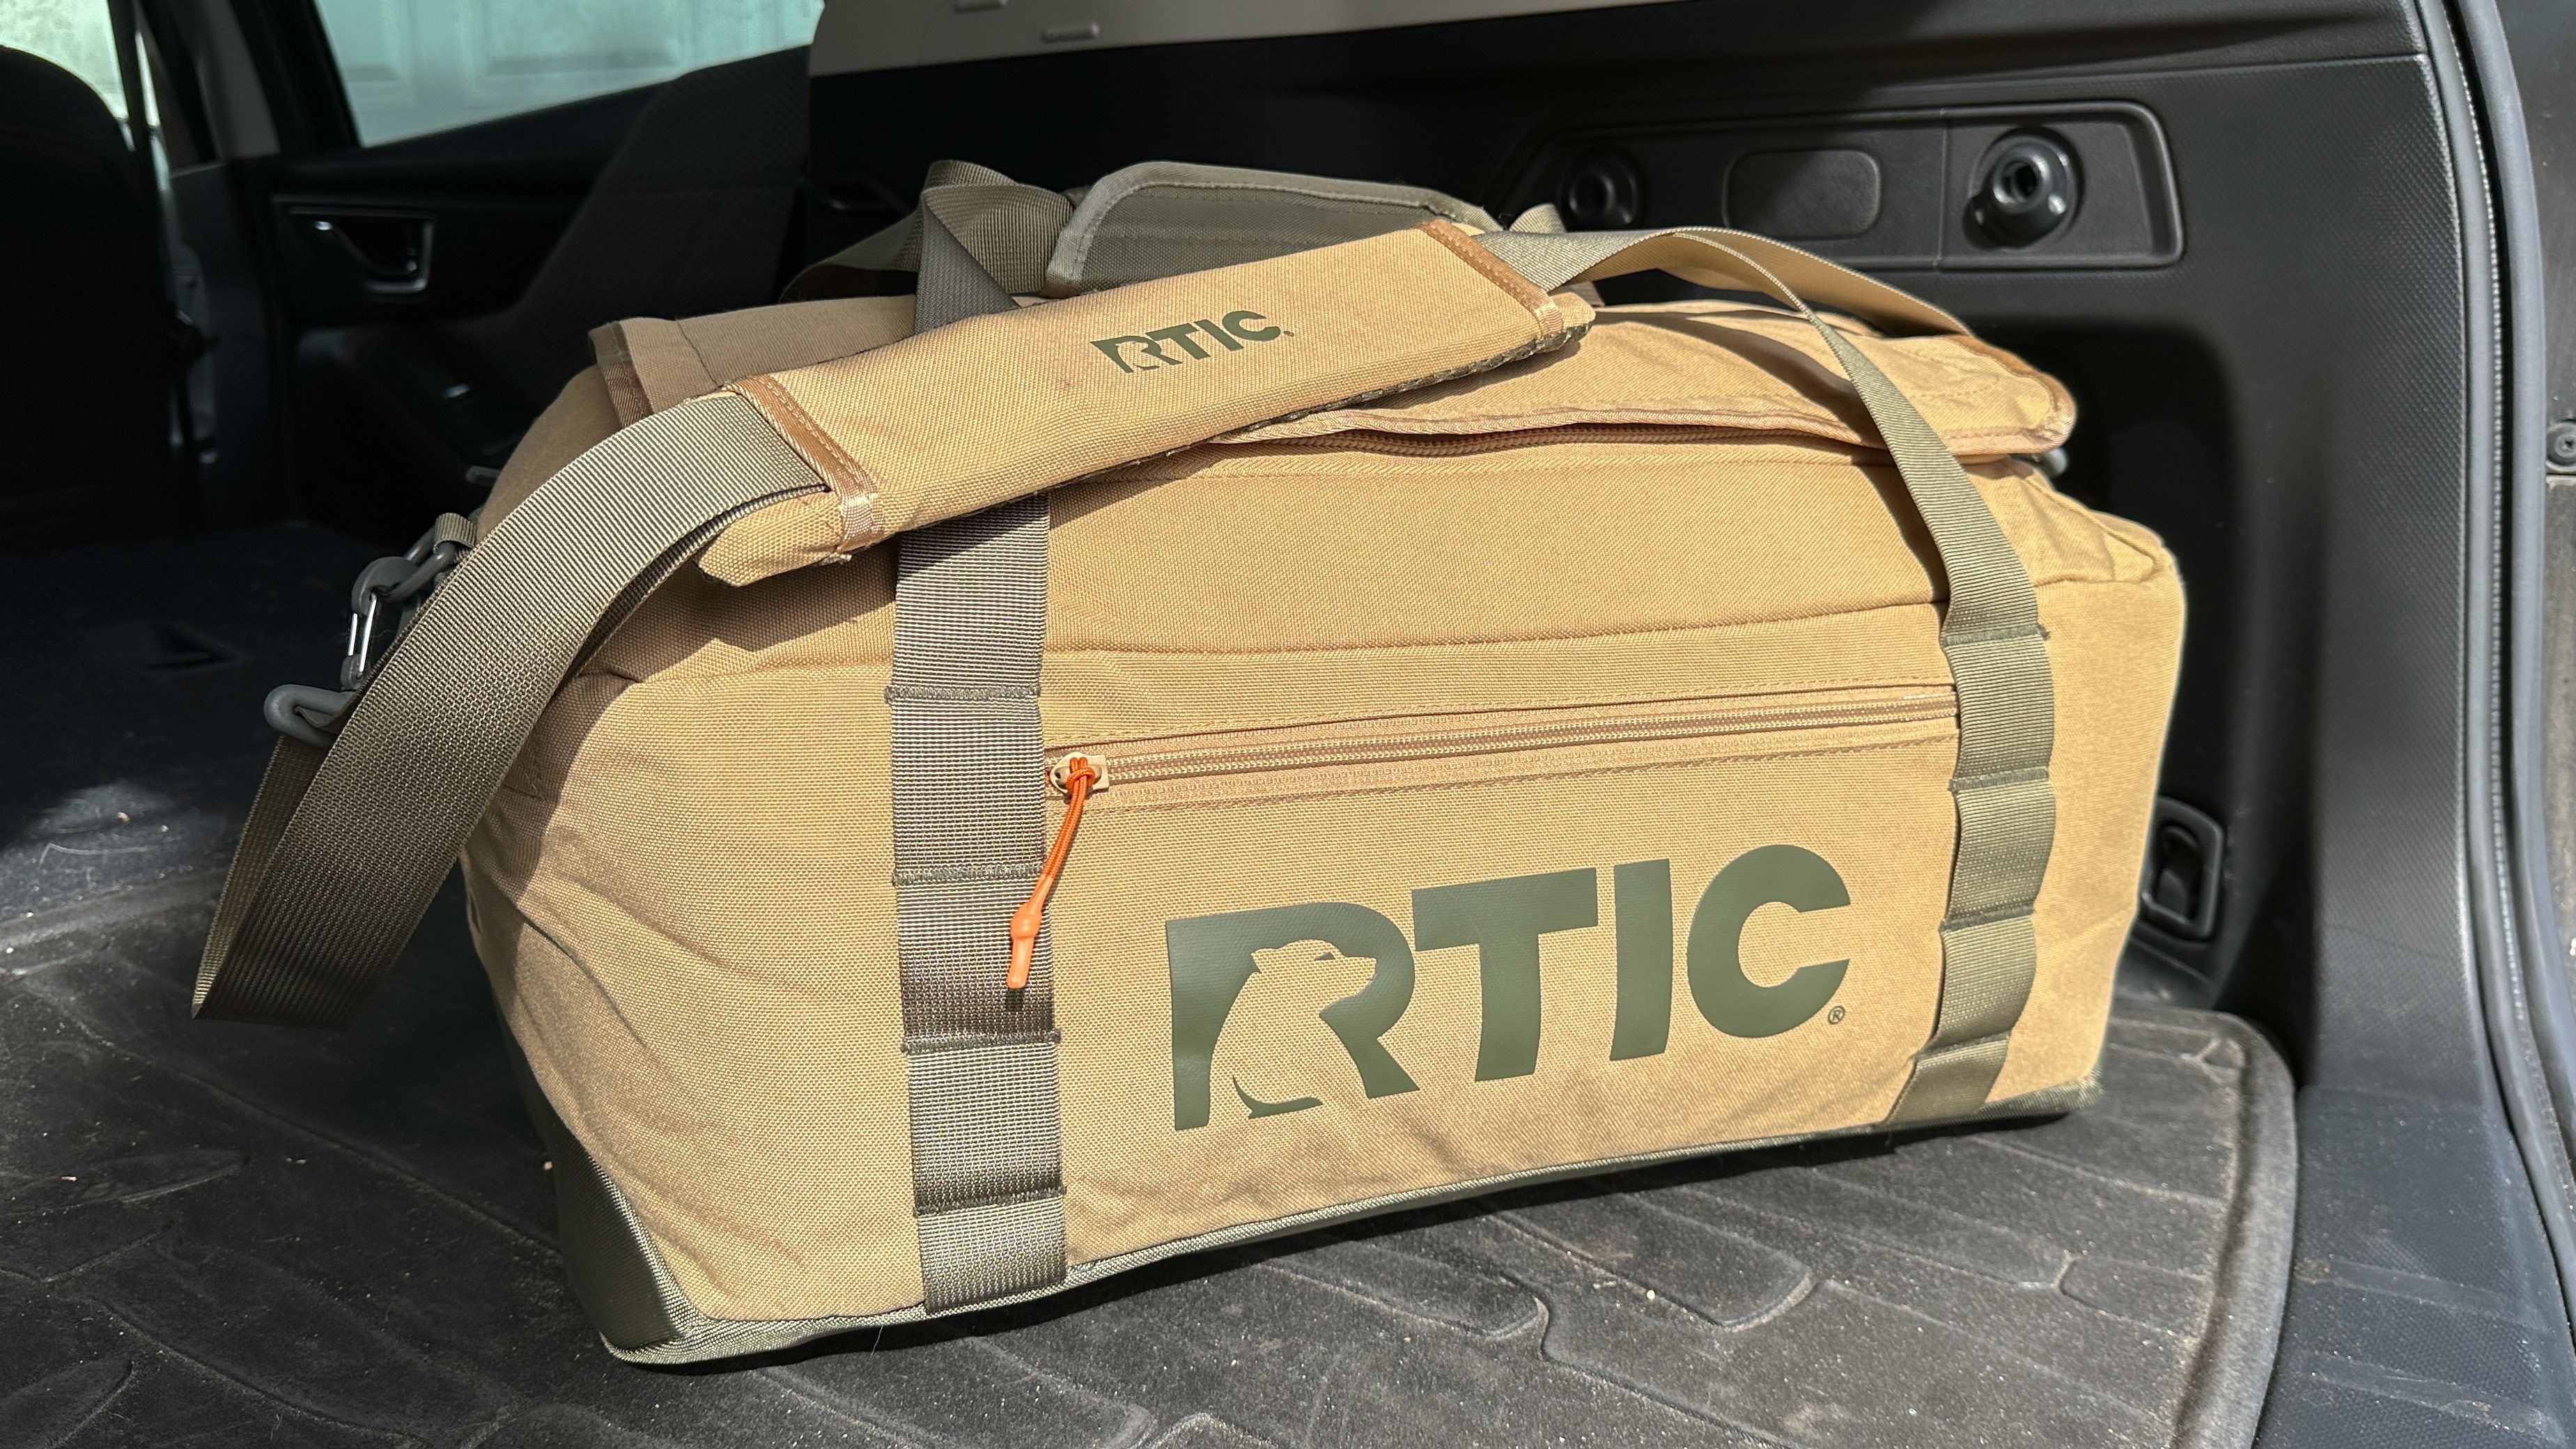 RTIC Duffle Bag - Water Resistant, Tough, & Durable